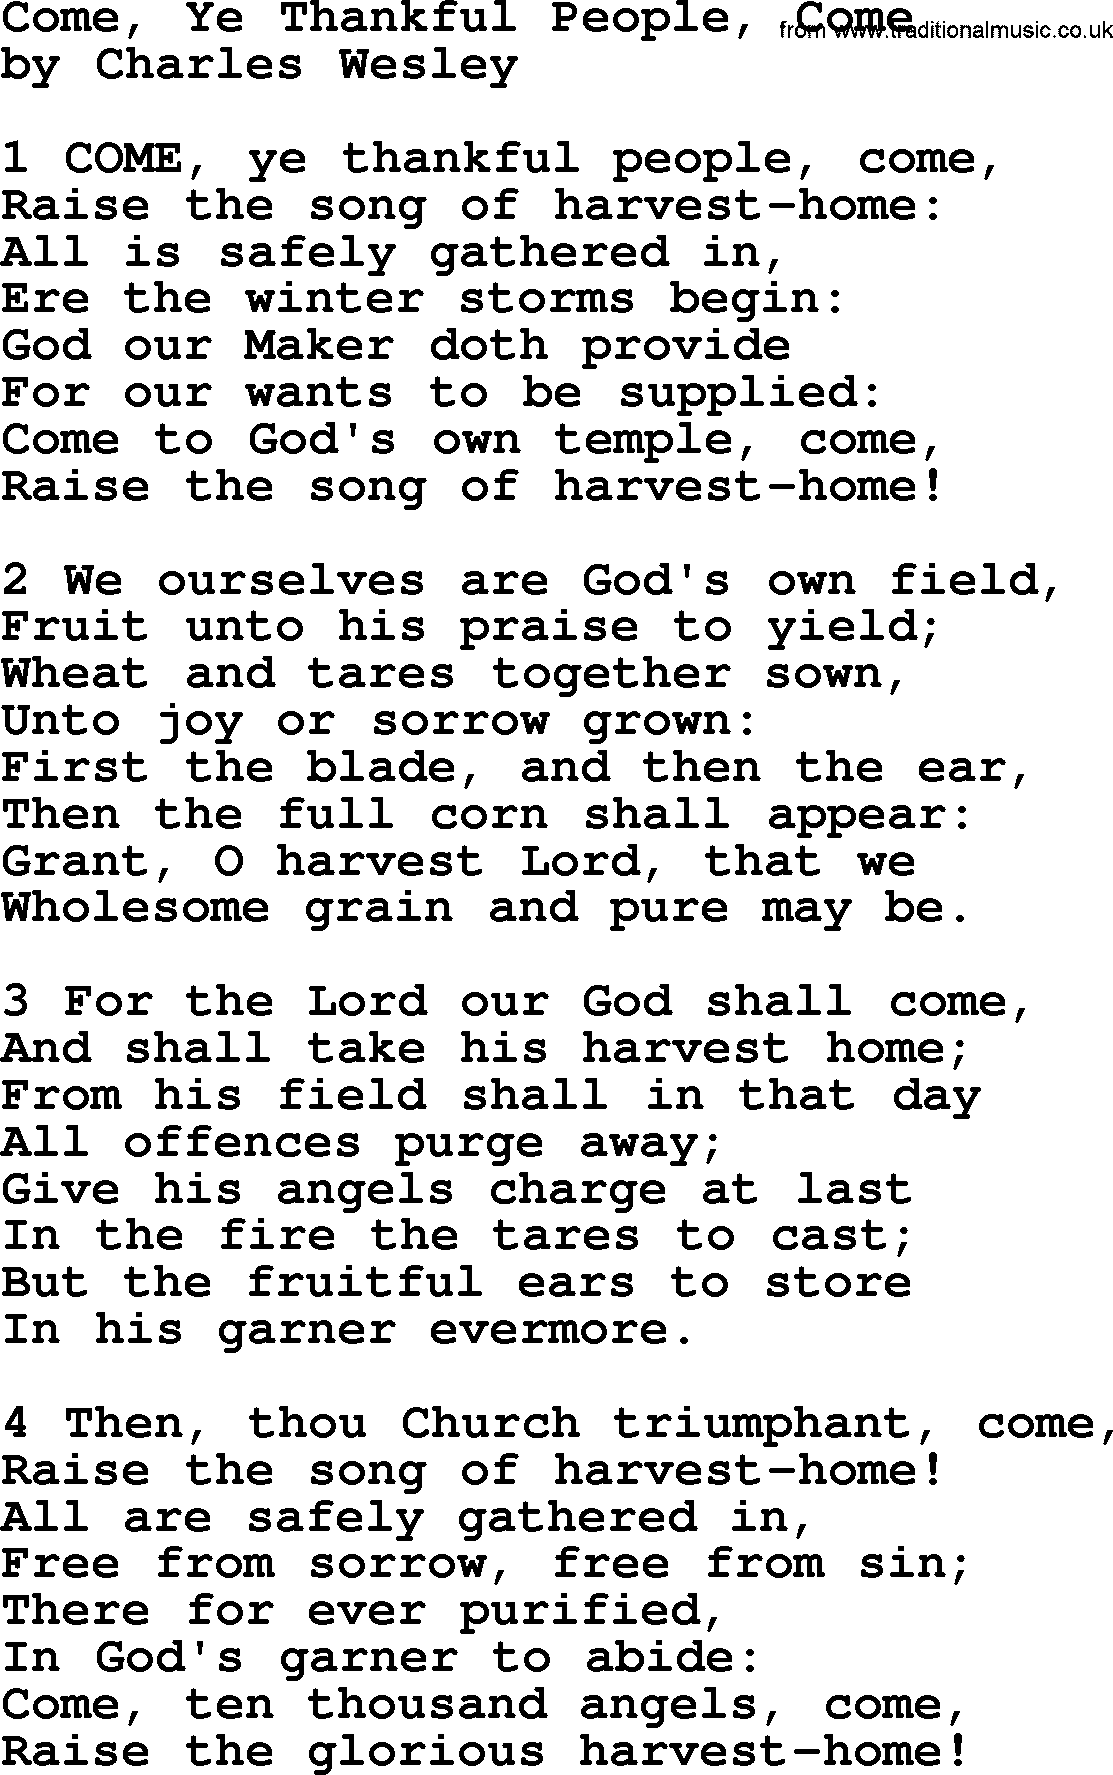 Charles Wesley hymn: Come, Ye Thankful People, Come, lyrics